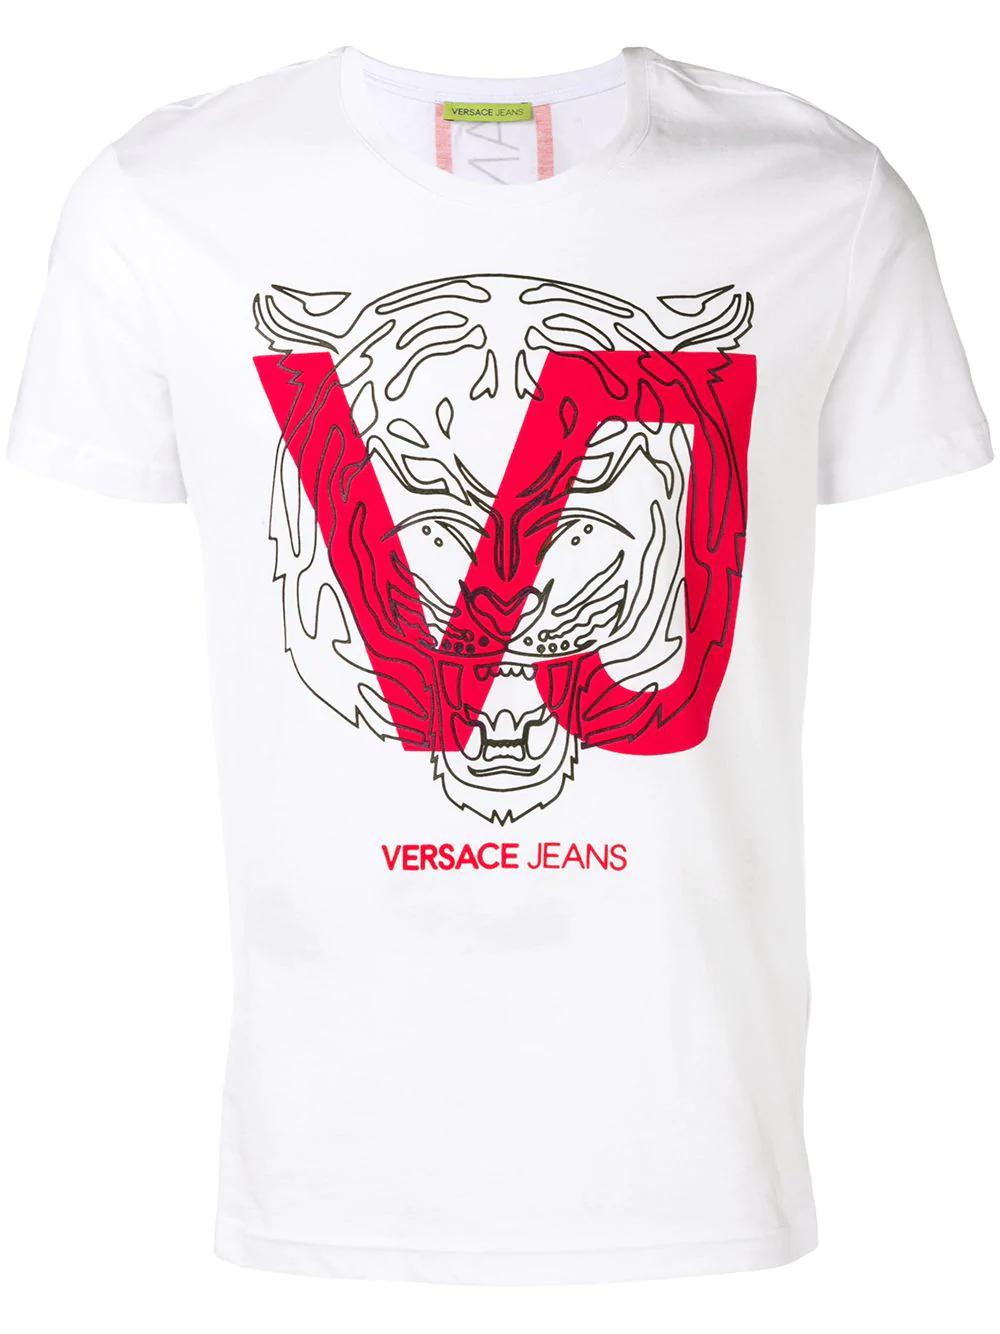 white and red versace shirt